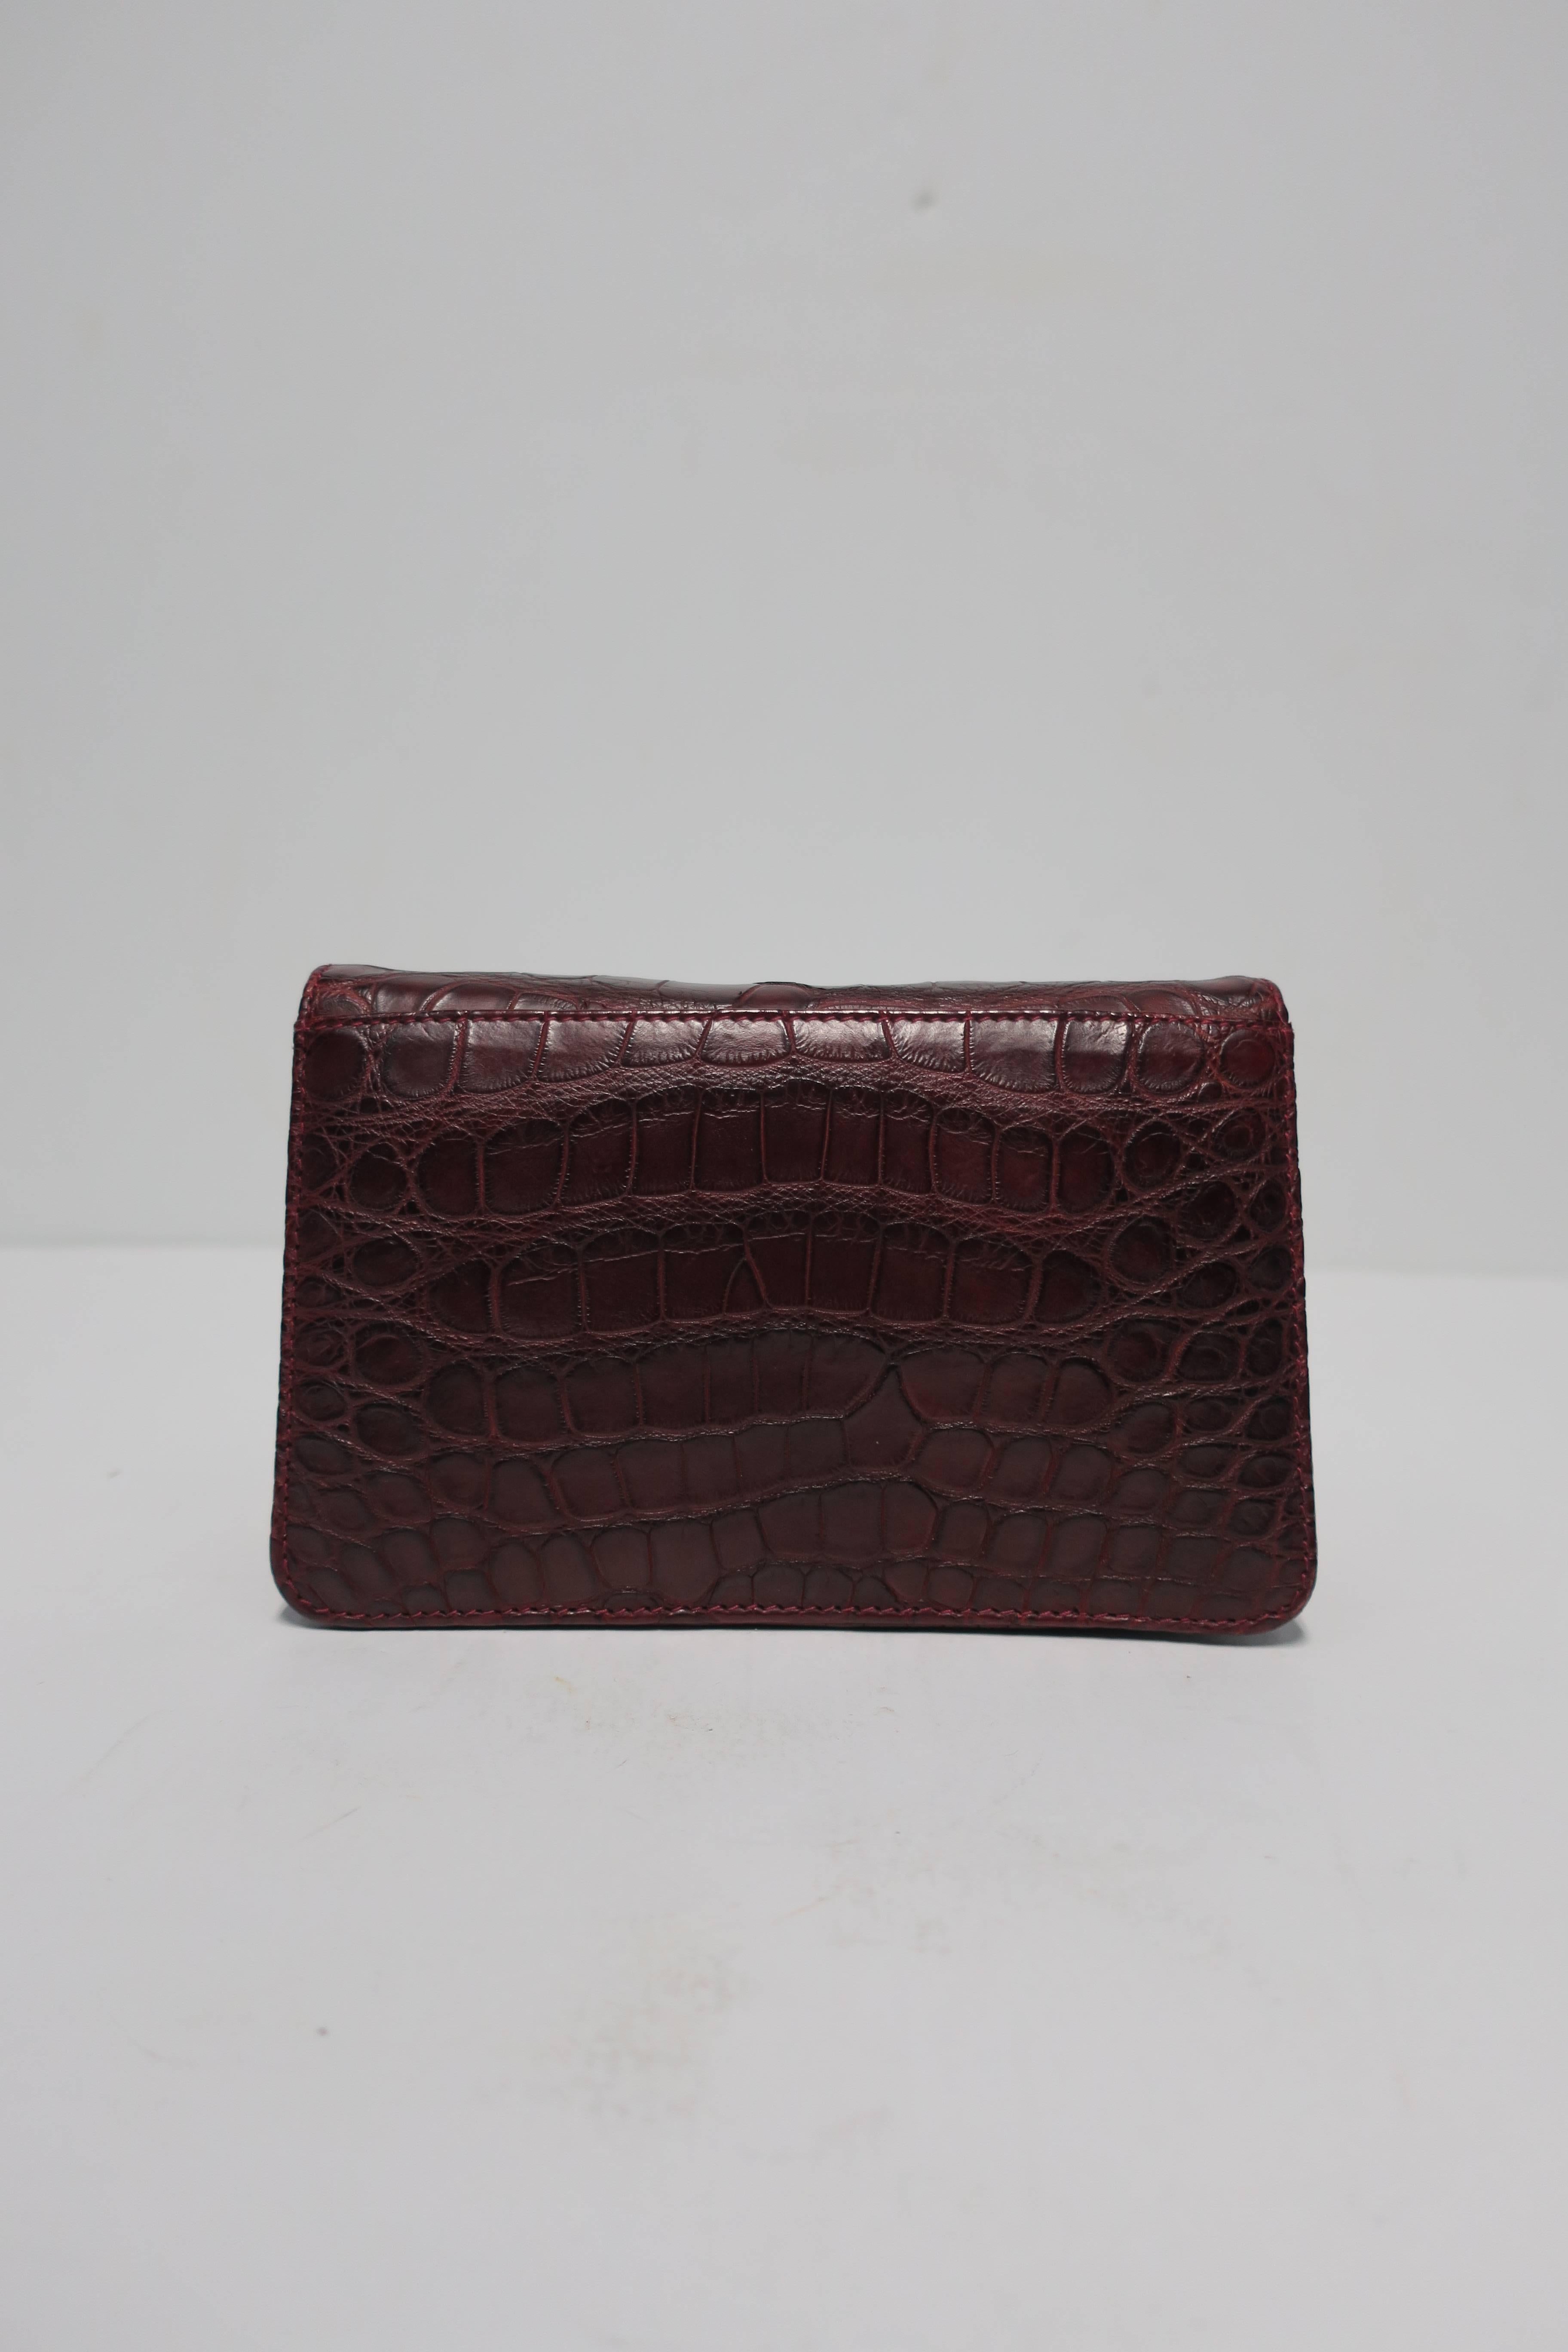 Italian Leather Crocodile Embossed Burgundy Red Handbag 4